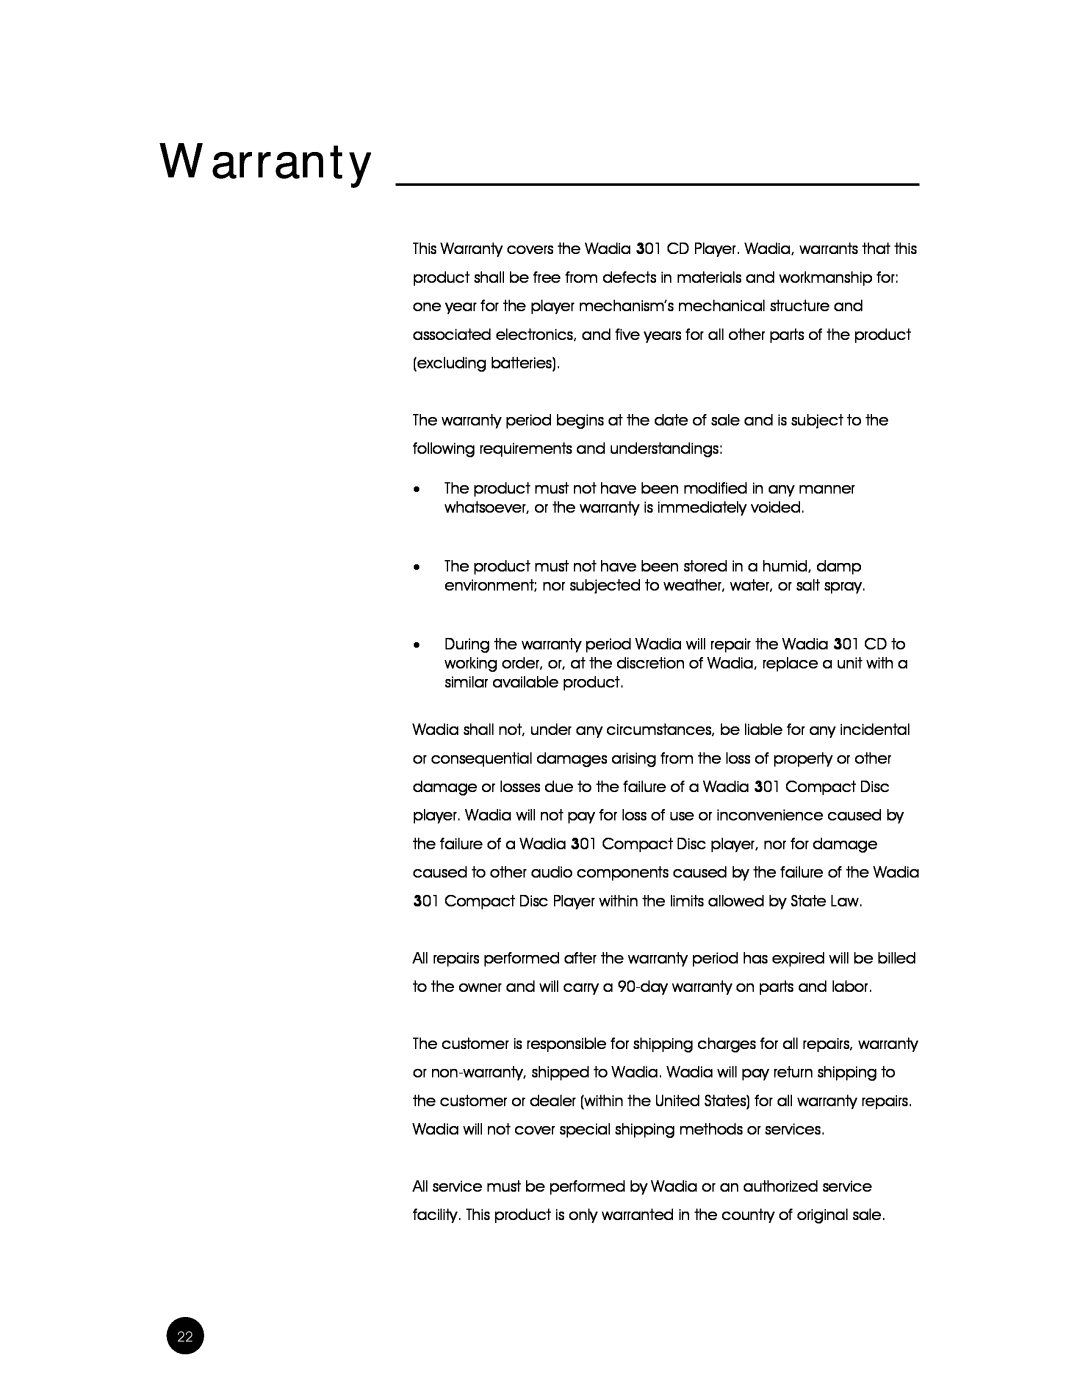 Wadia Digital 301 owner manual Warranty 